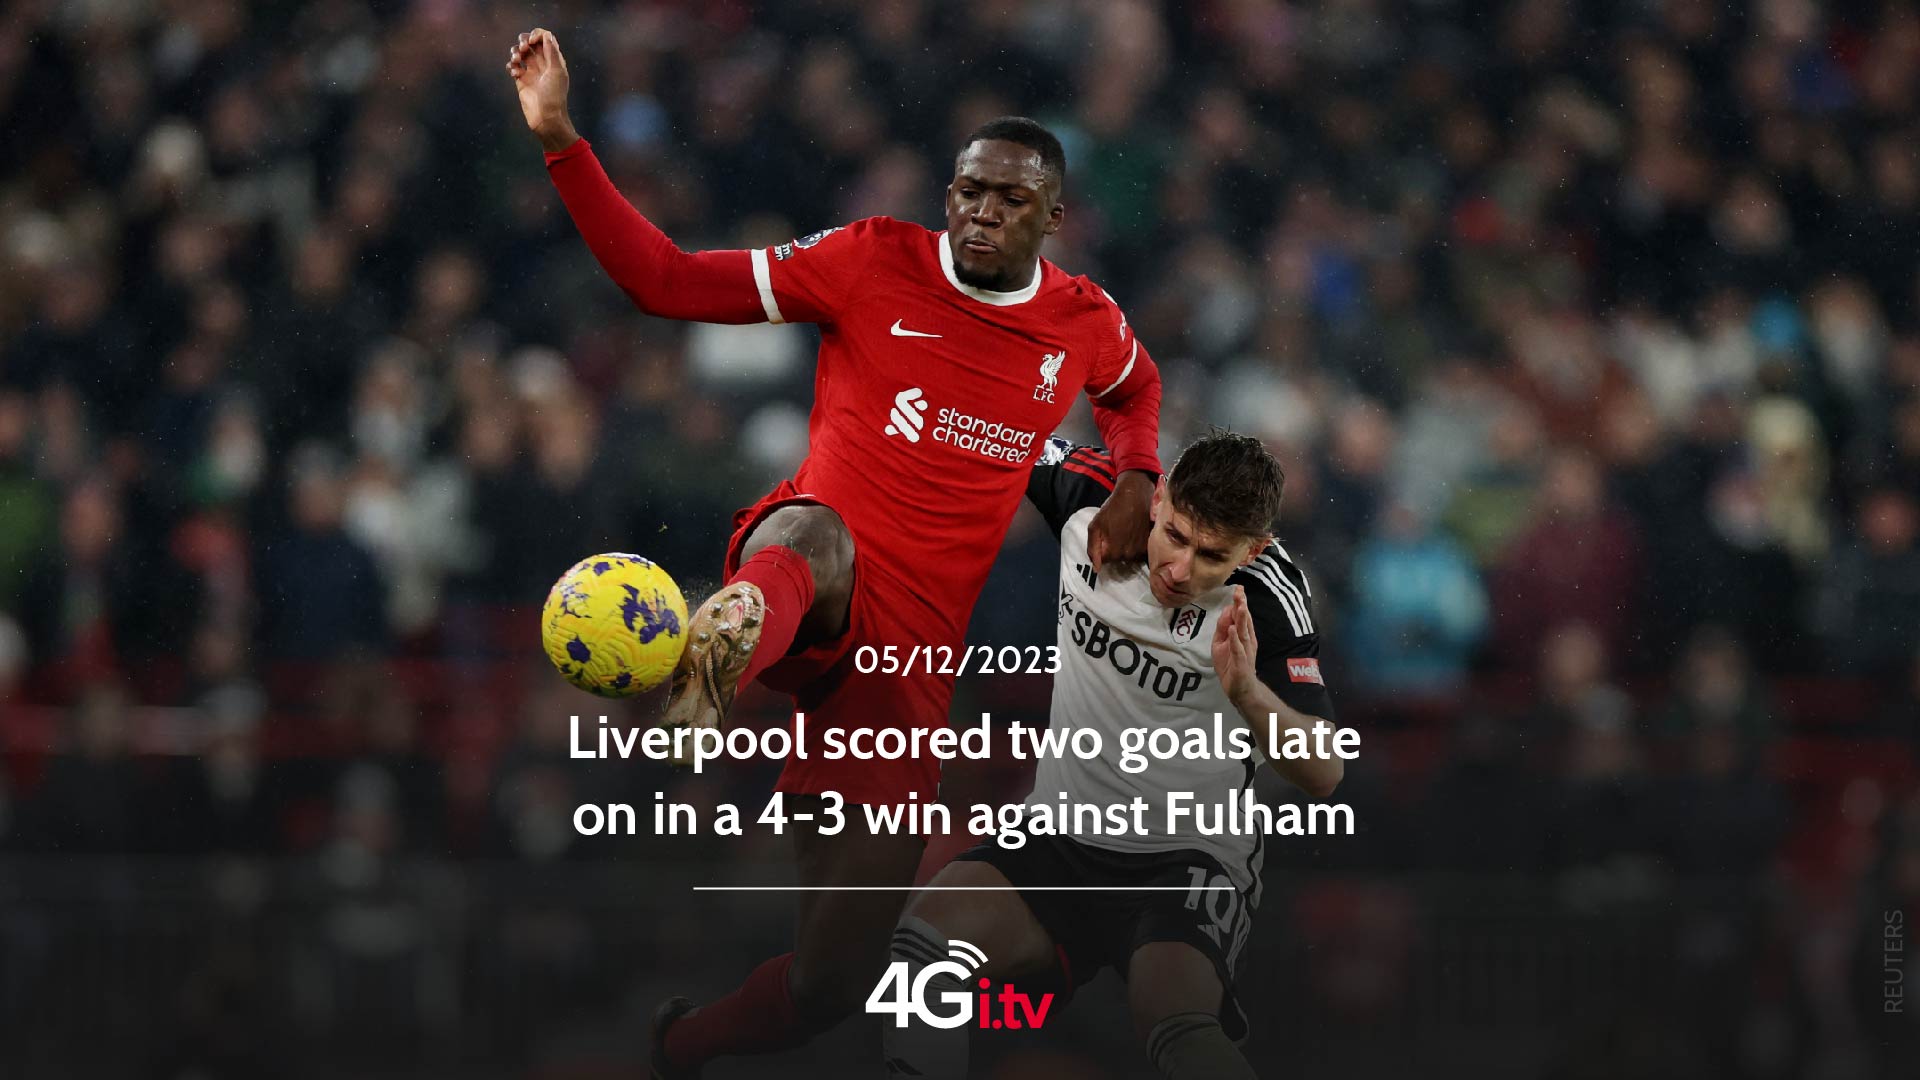 Lee más sobre el artículo Liverpool scored two goals late on in a 4-3 win against Fulham